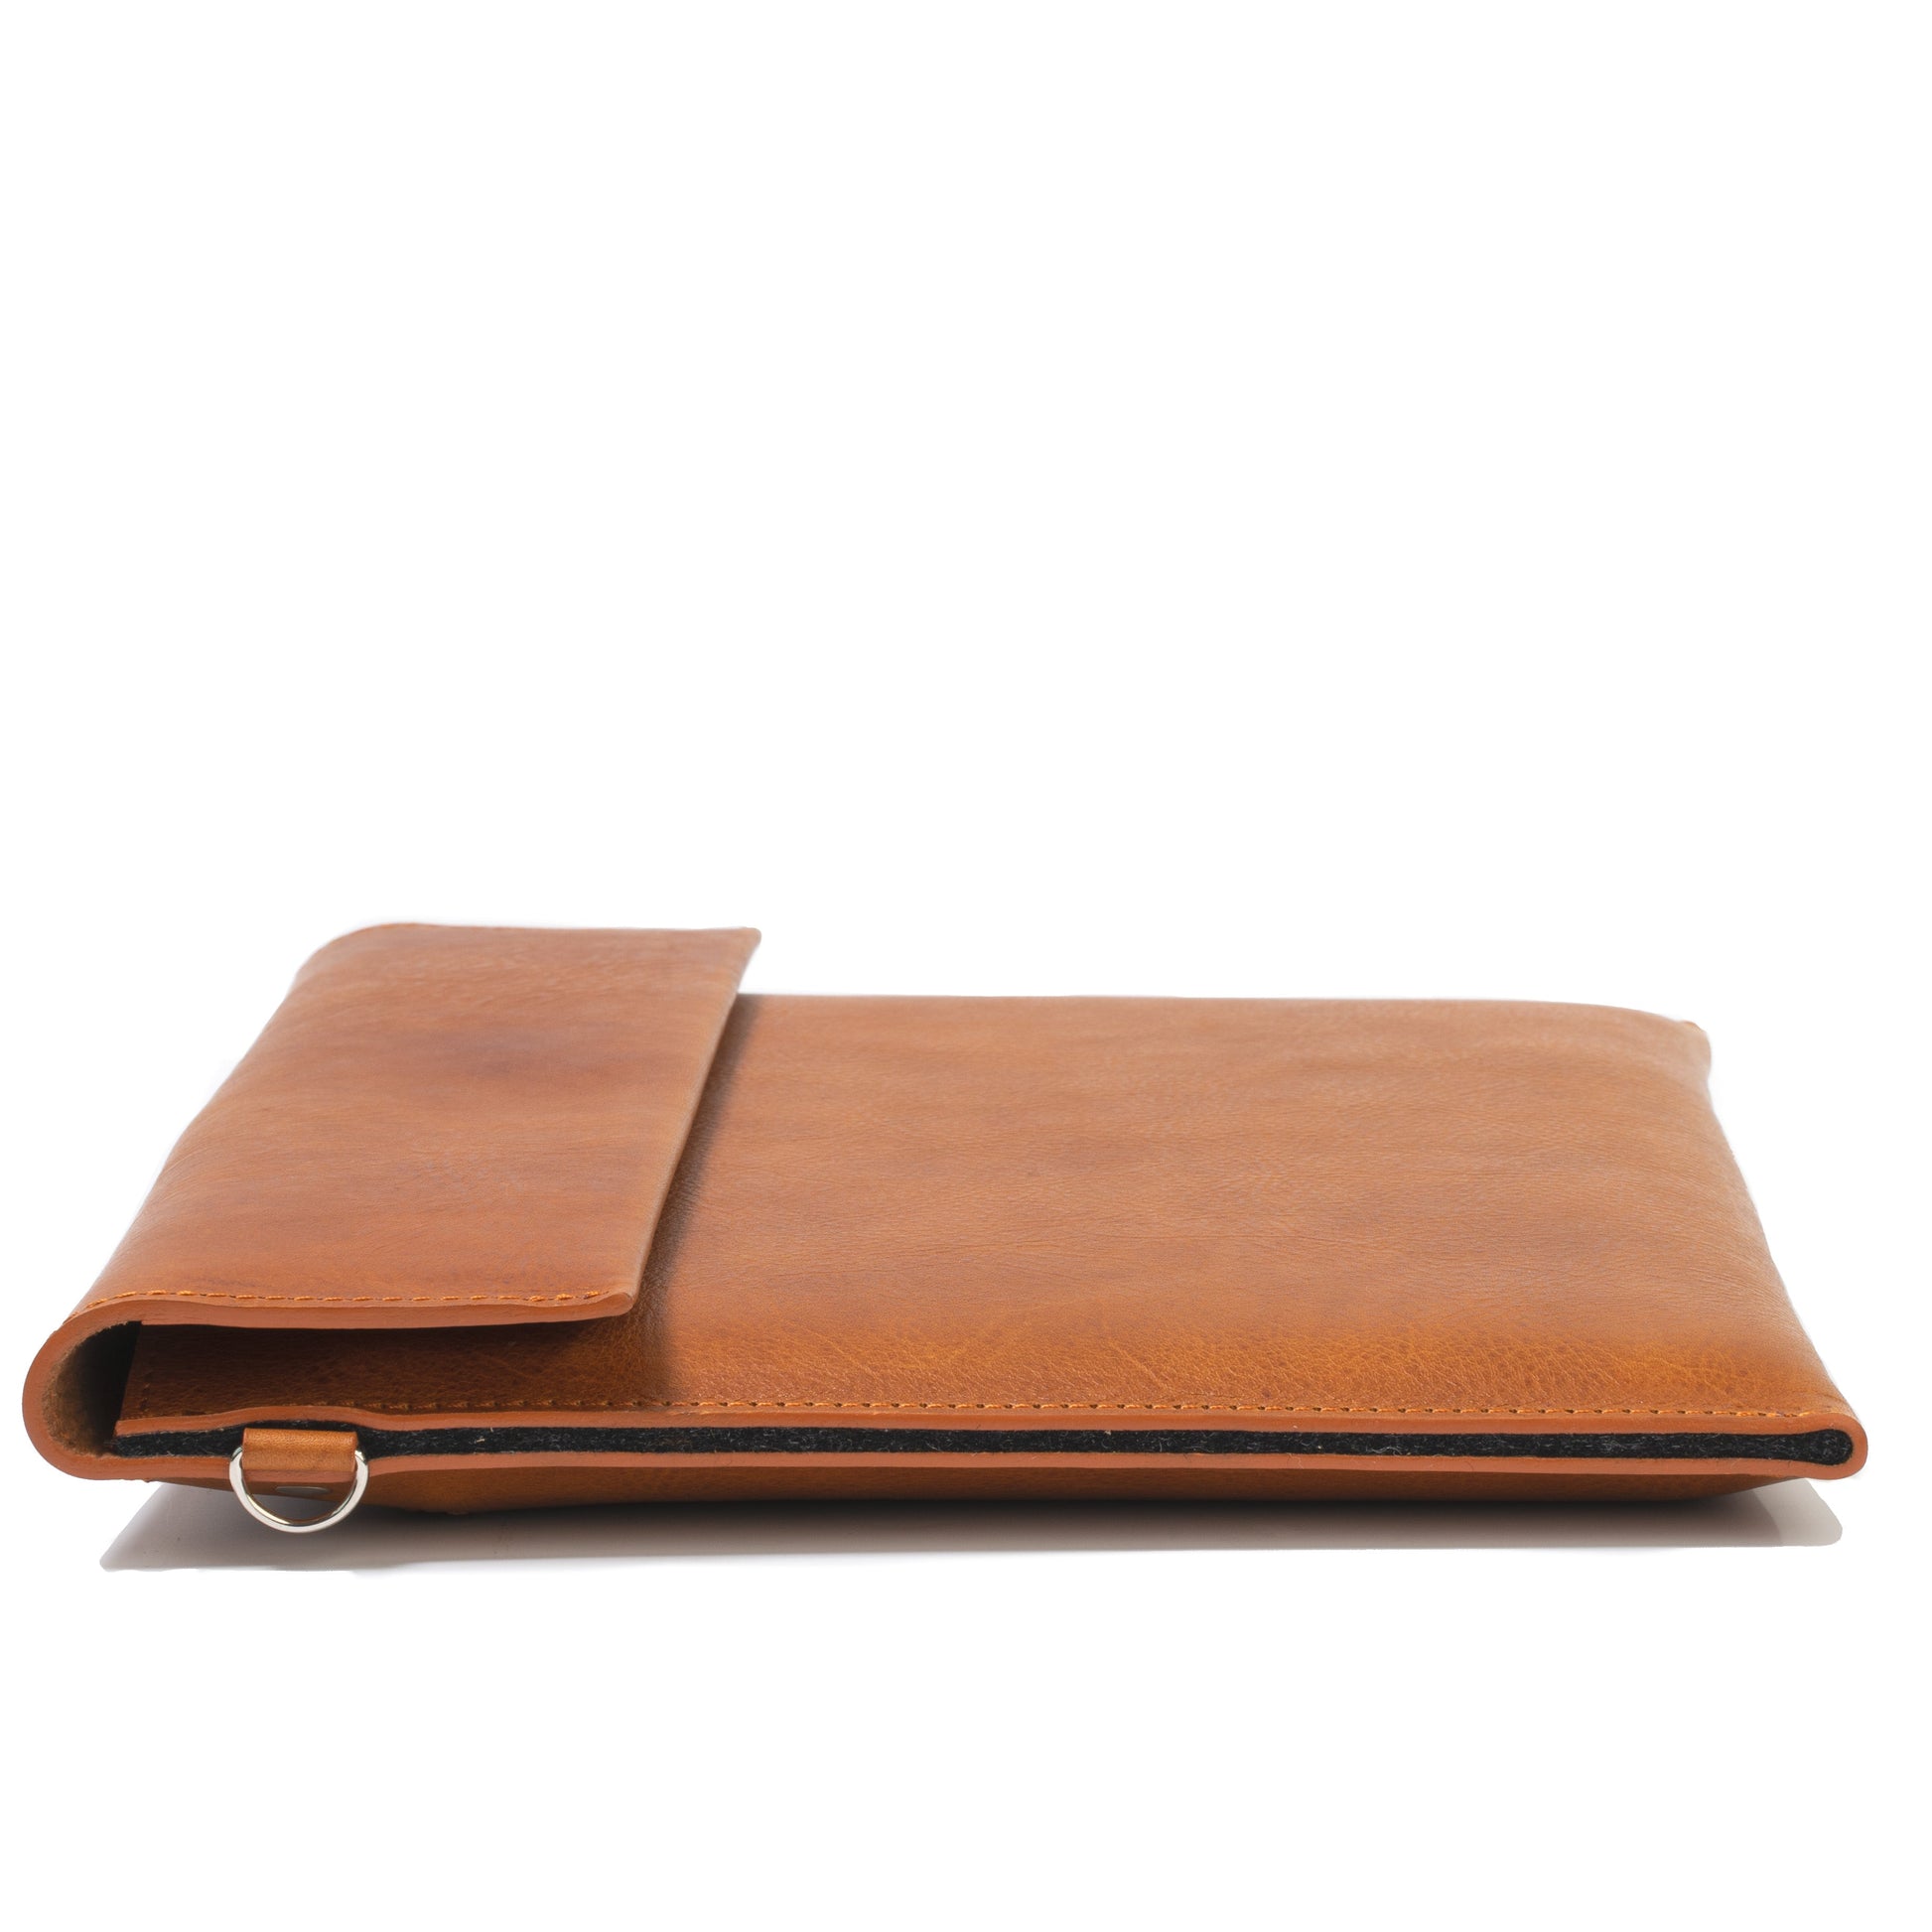 Leather Bag for iPad - The Minimalist 2.0-5